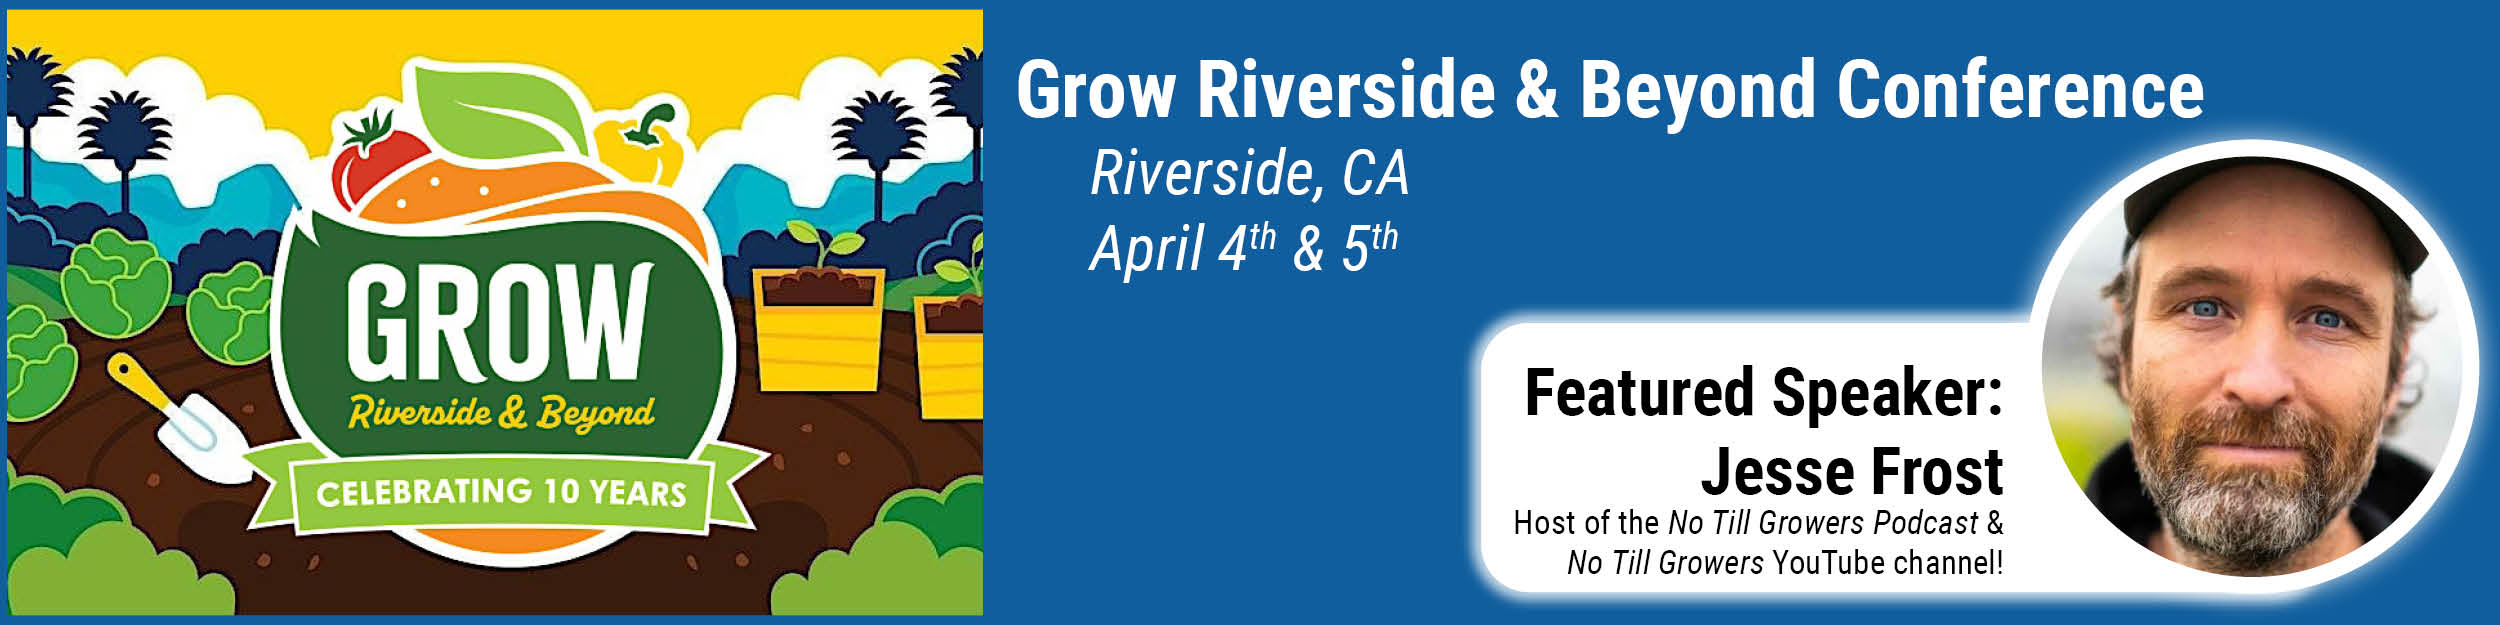 Grow Riverside Conference - Riverside, CA